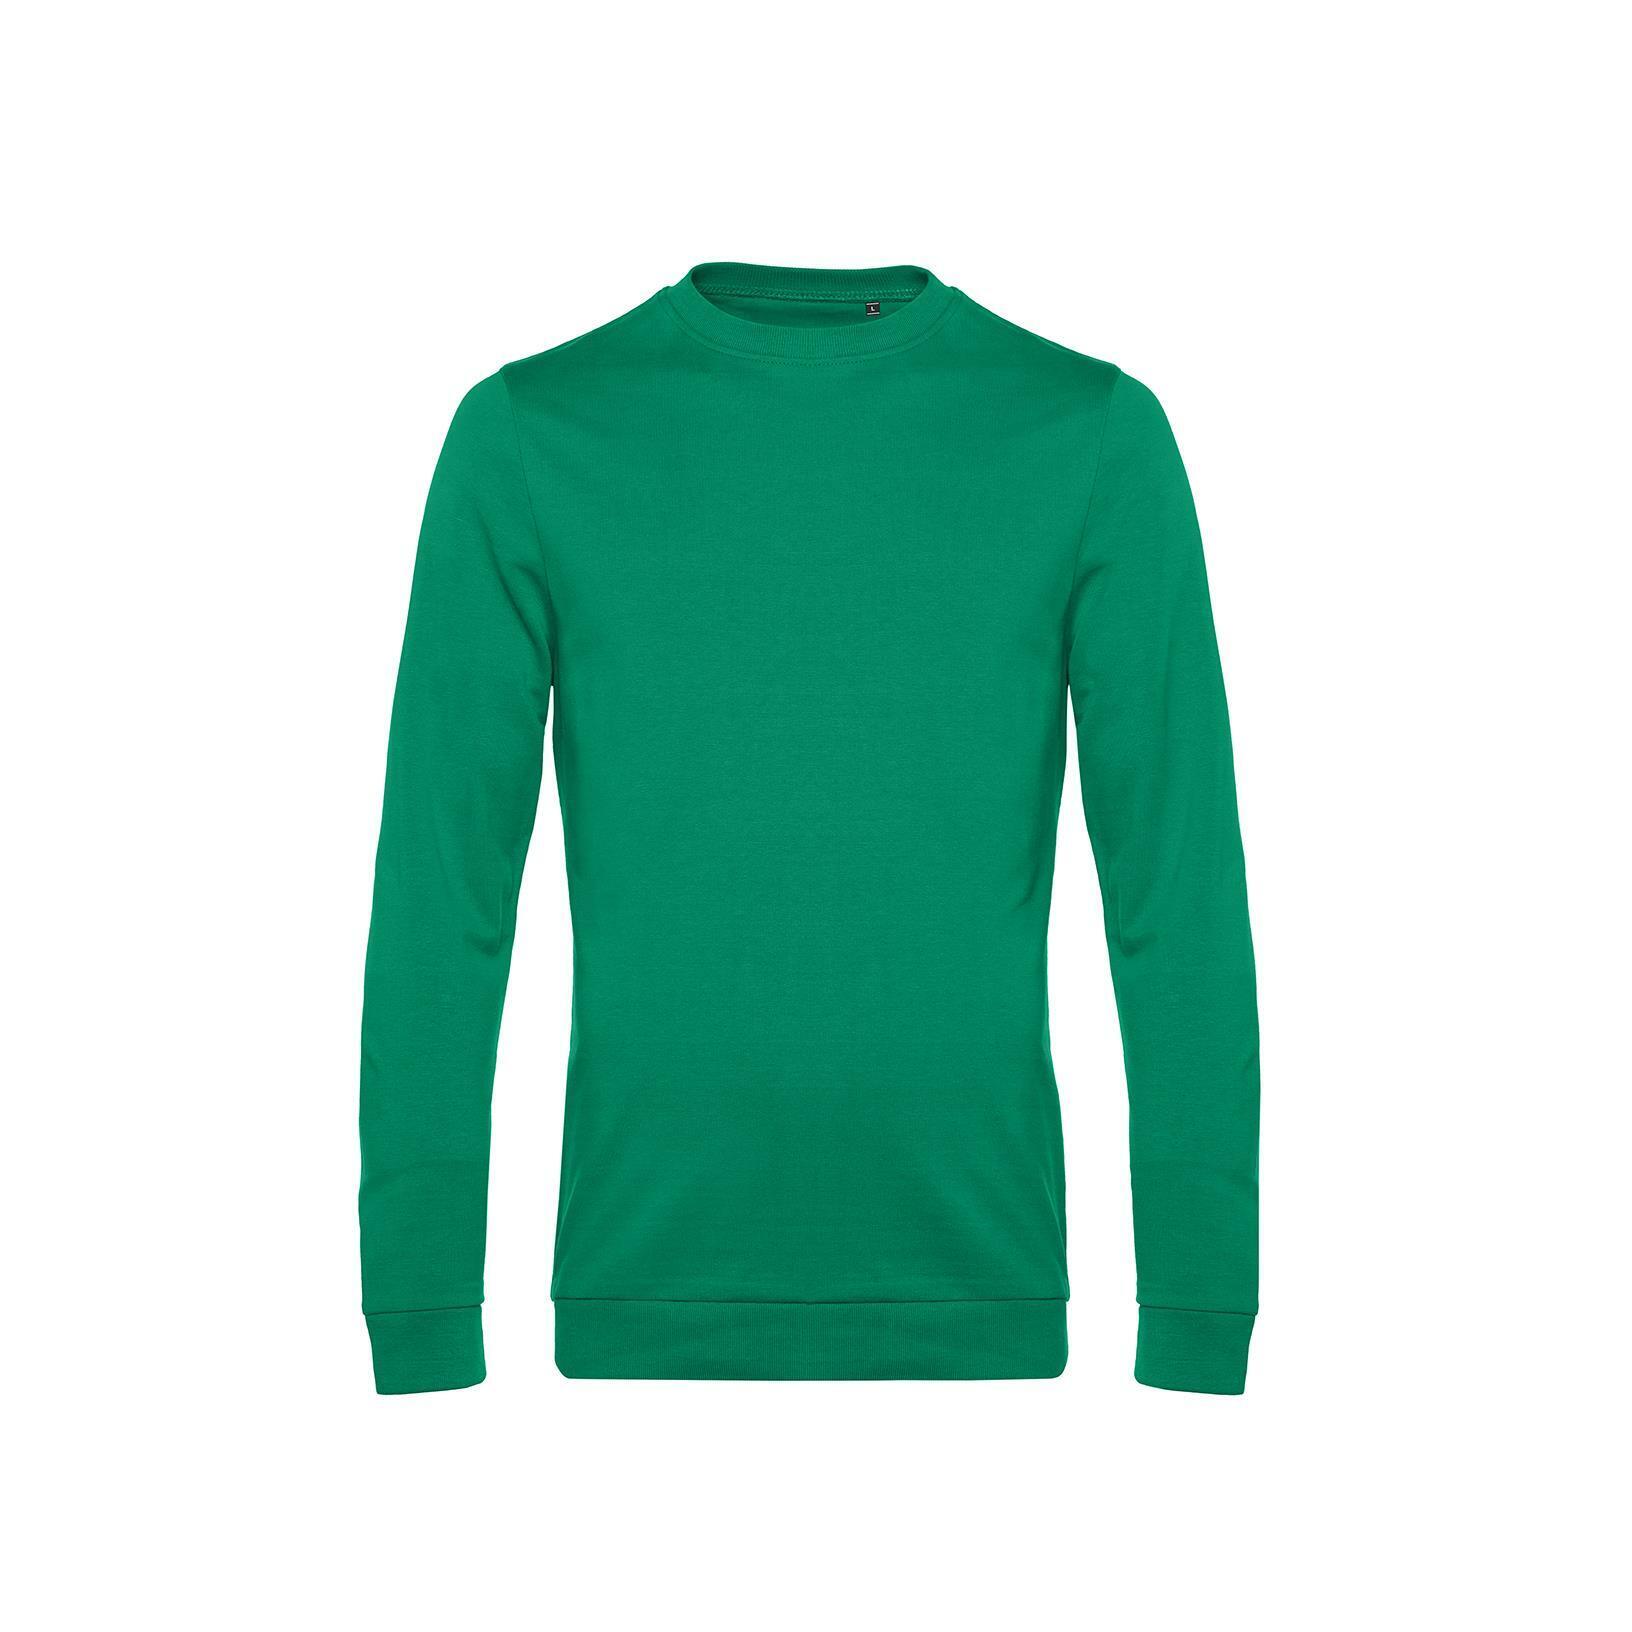 Trendy Sweater sweatshirt trui unisex heren kelly groen